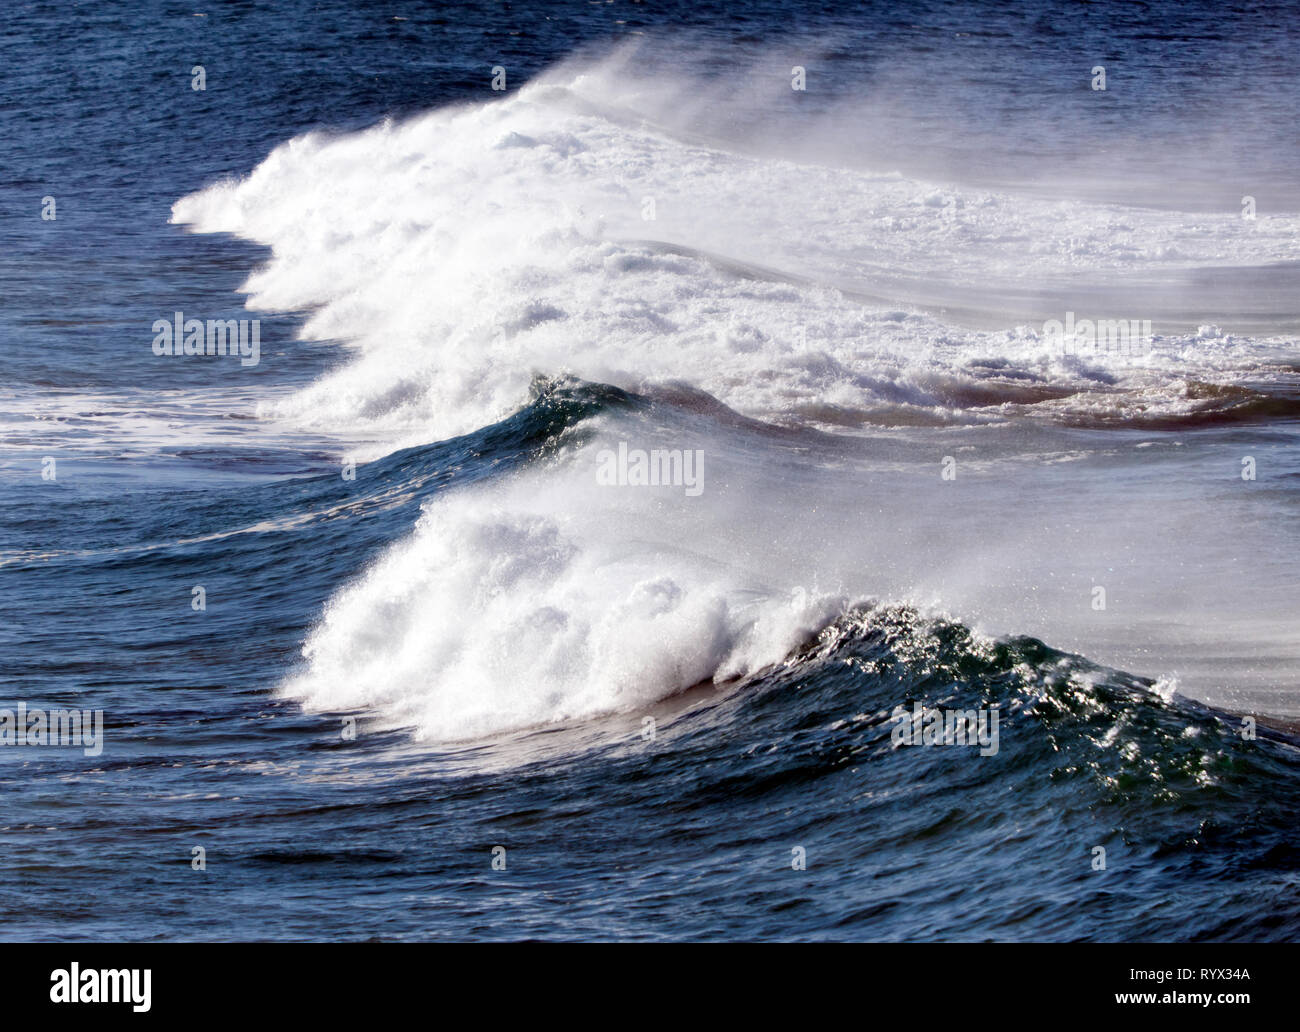 Big Surf, Great Ocean Road, Australia Stock Photo